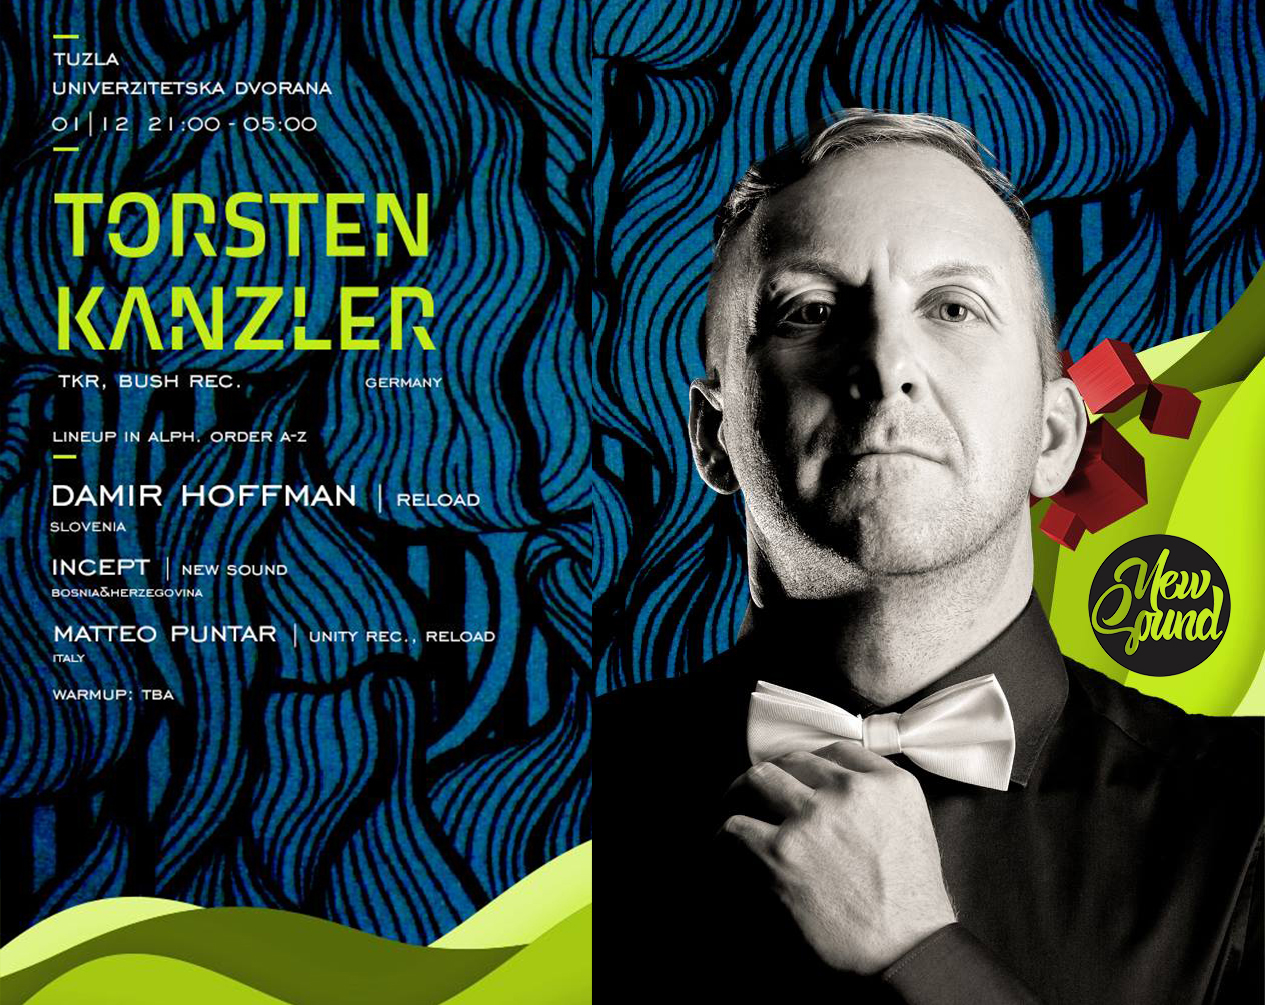 Berlinski DJ Torsten Kanzler u decembru u Tuzli